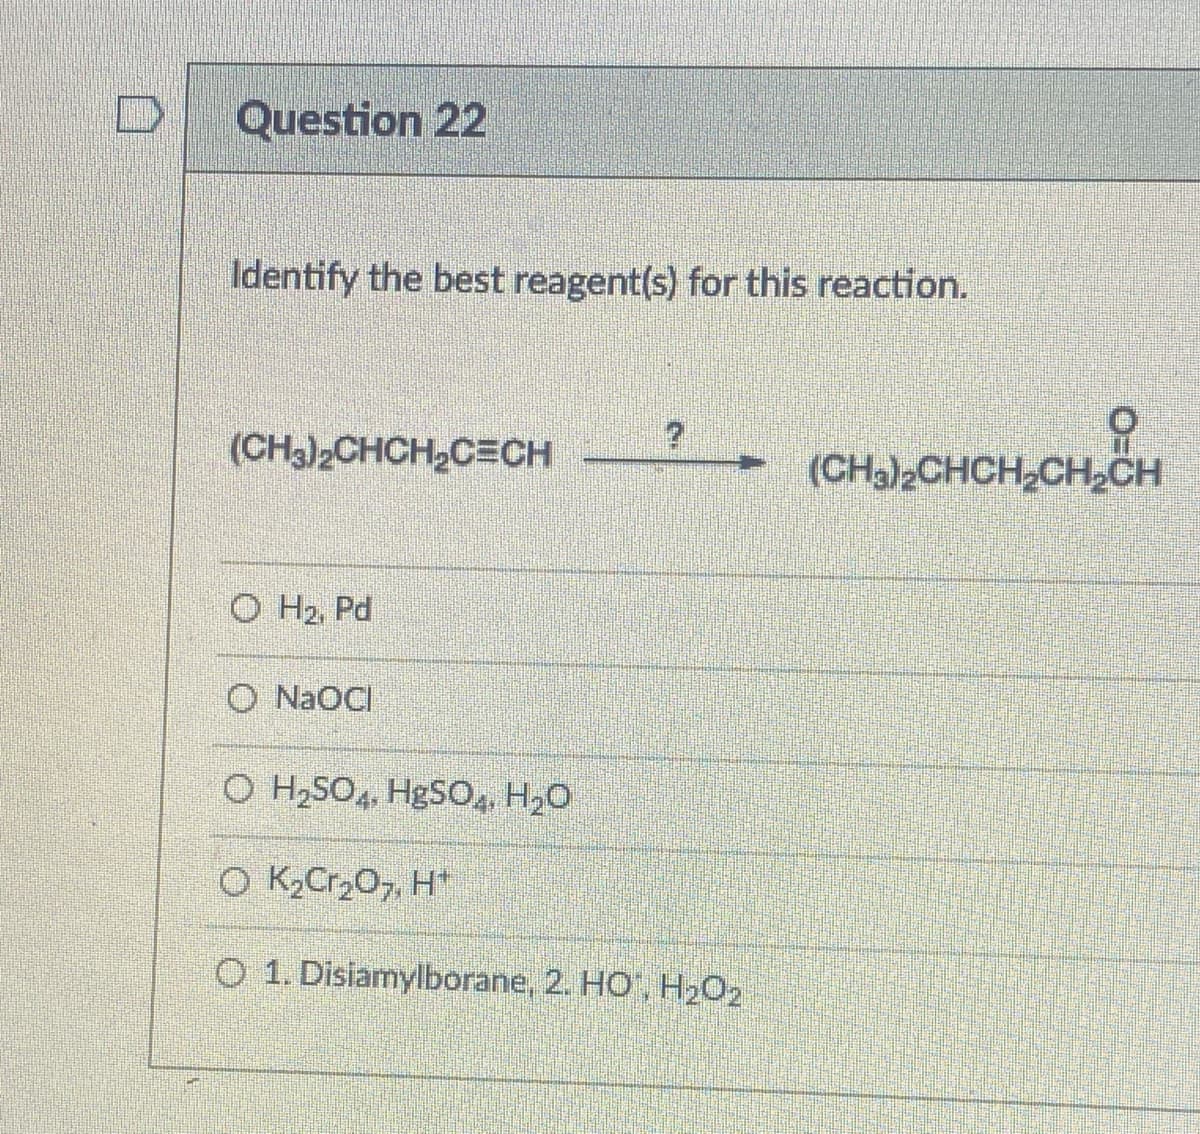 Question 22
Identify the best reagent(s) for this reaction.
(CH3)2CHCH2CECH
(CH.),CHCH,CH,ỔH
O H2, Pd
O NaOCI
O H,SO4, HgSO, H20
O K,Cr,0, H*
O 1. Disiamylborane, 2. HO', H202
